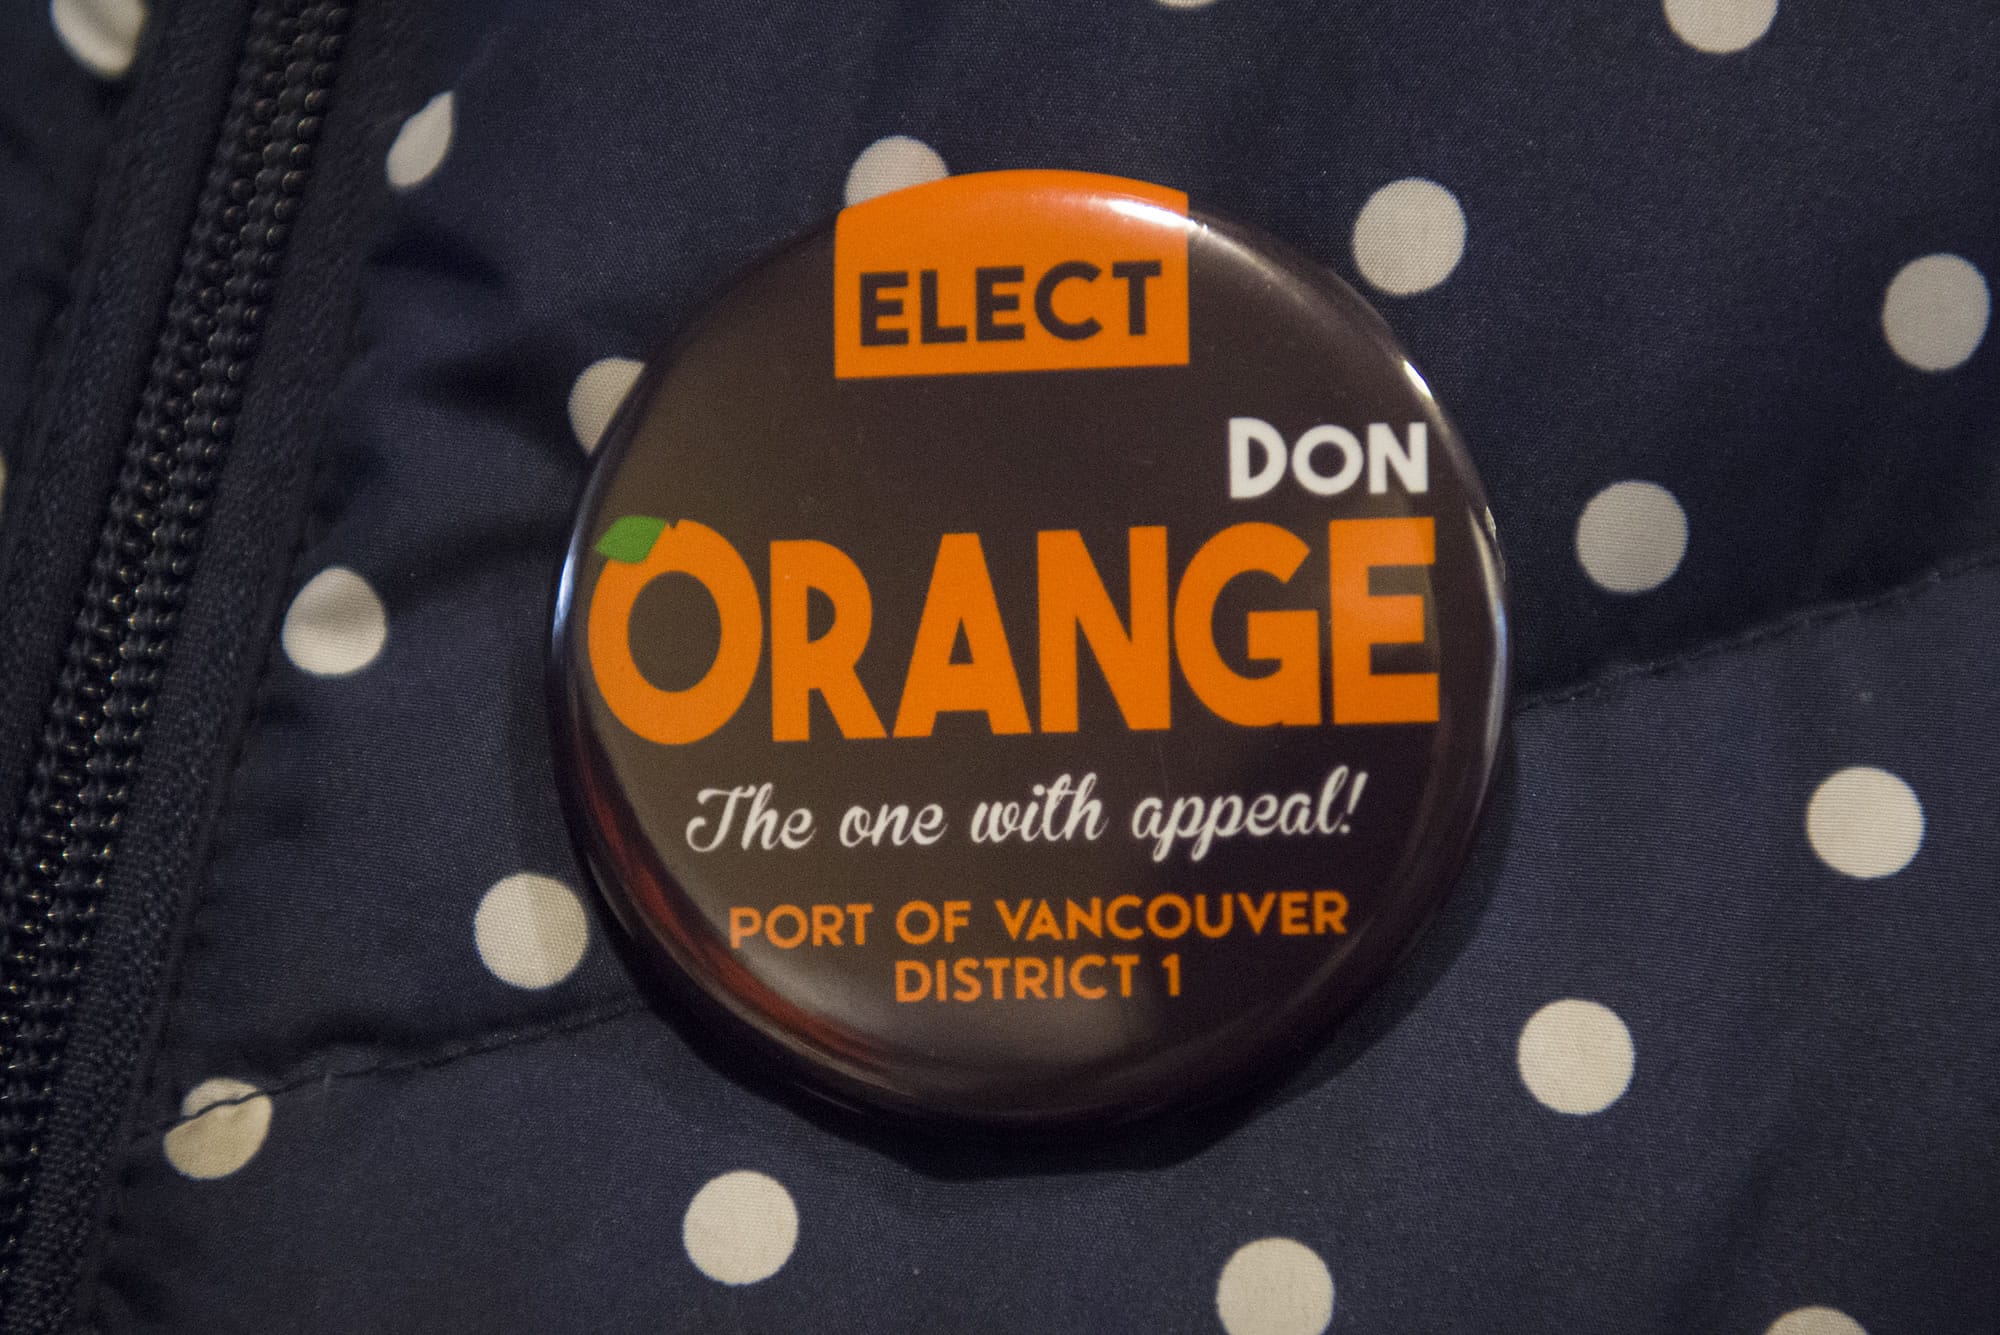 Don Orange is winning the race for the Port of Vancouver commissioner seat.